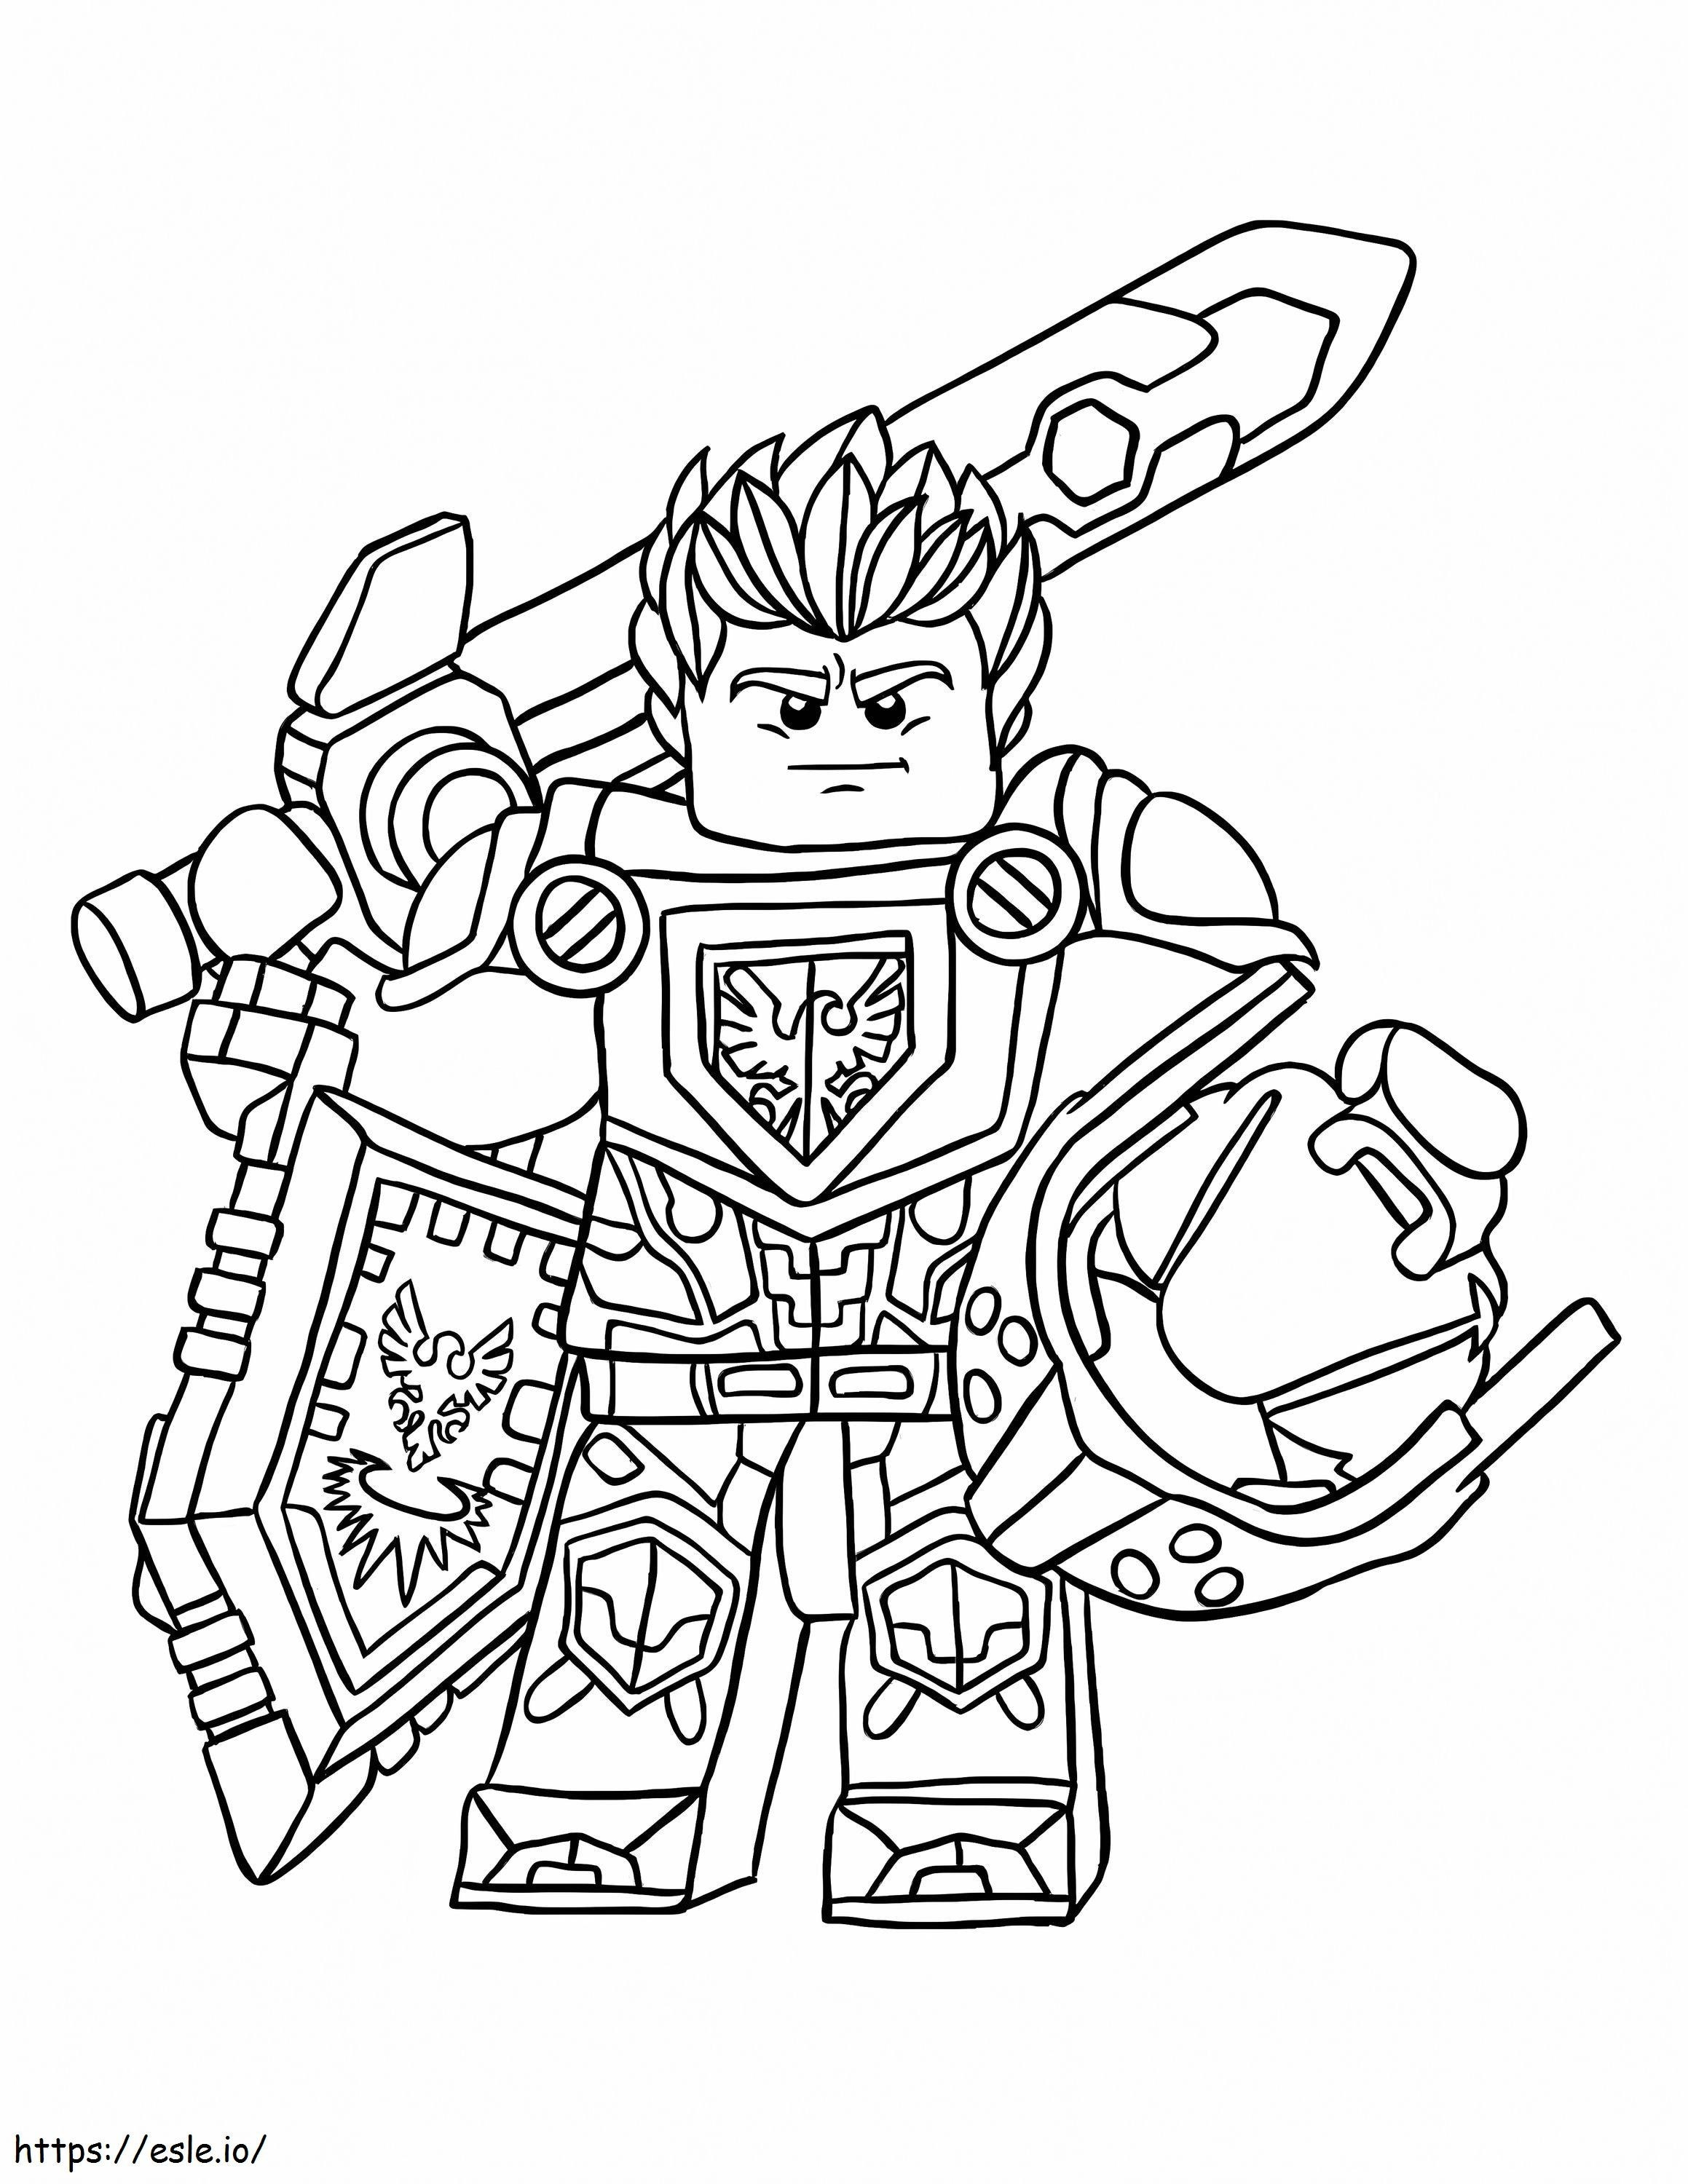 Cool Lego Knight de colorat